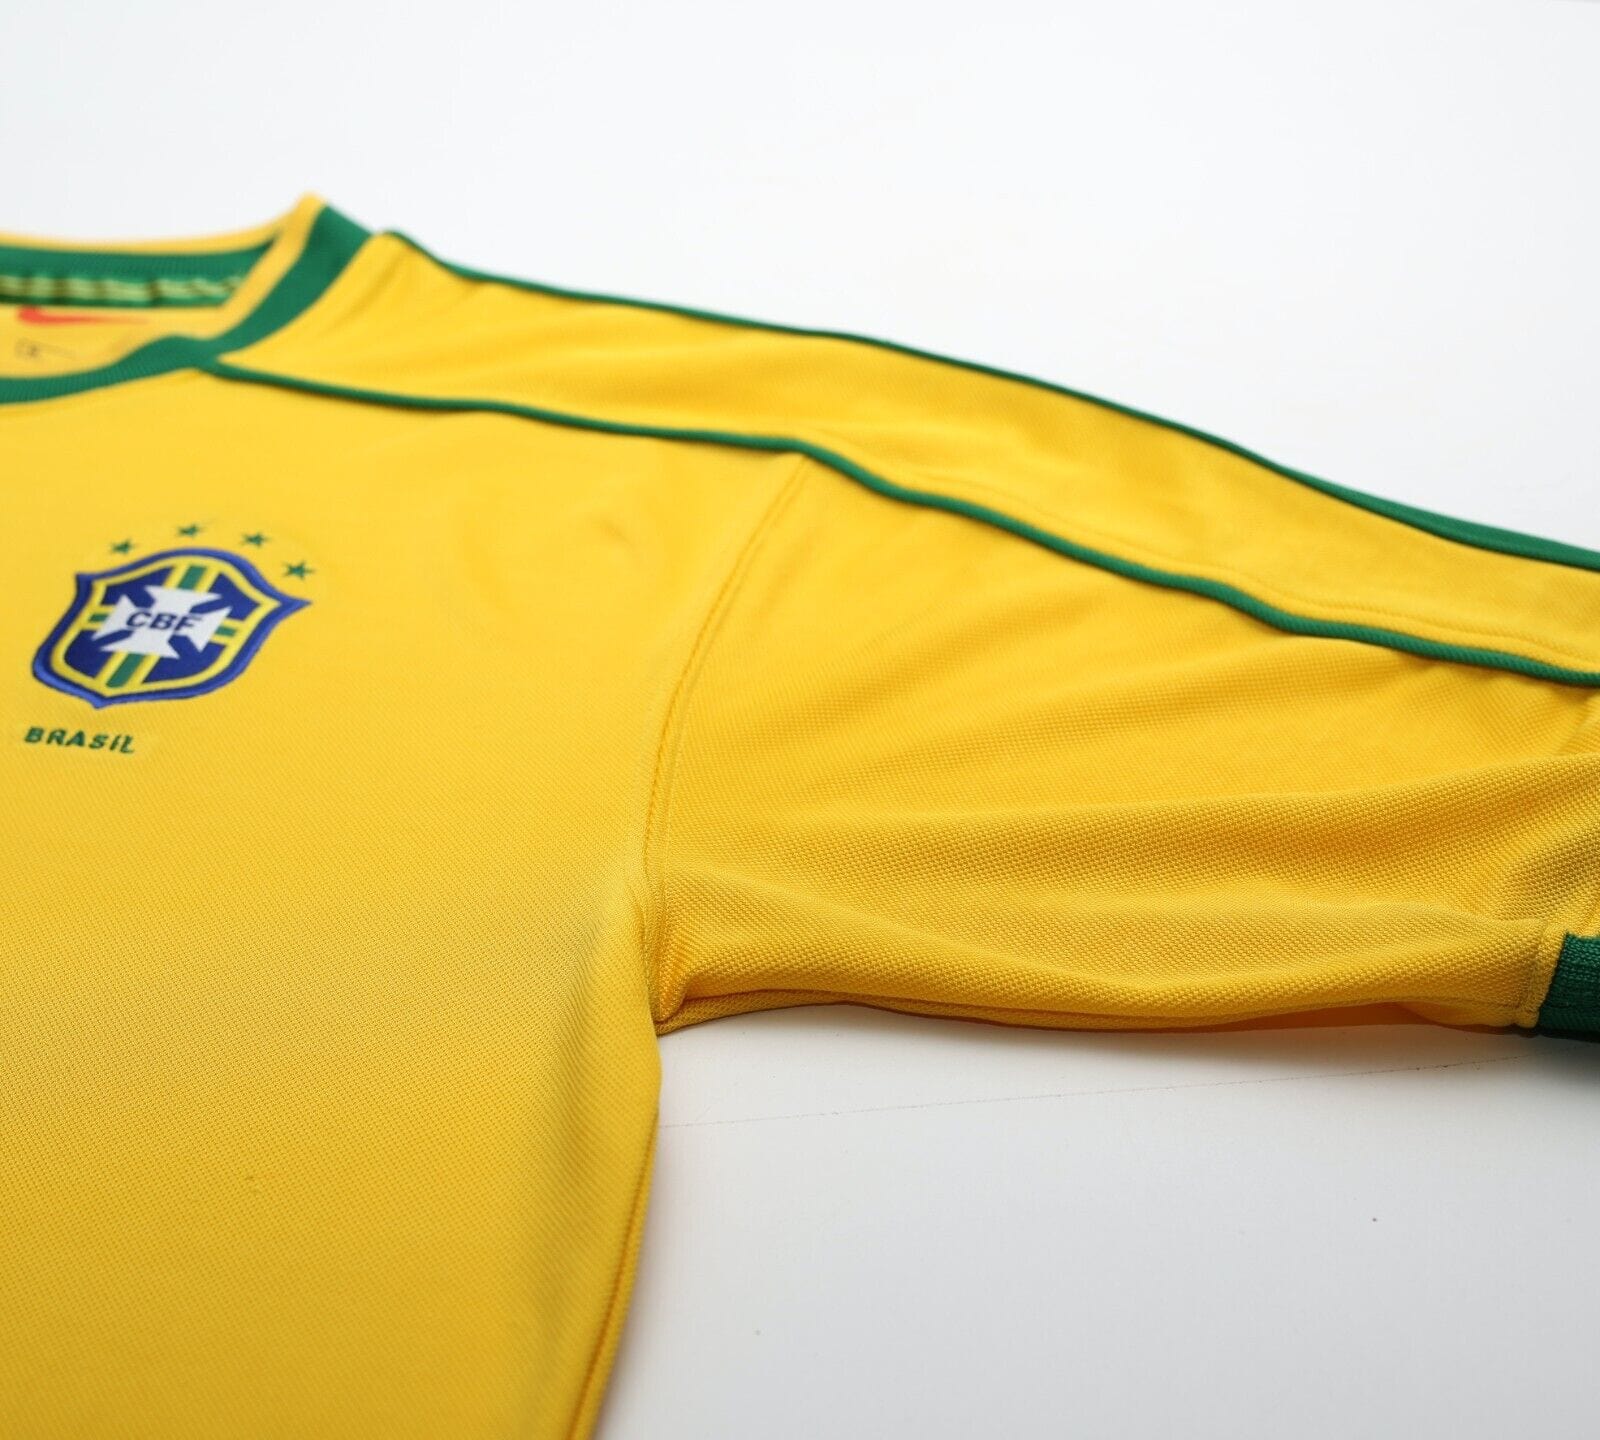 1998/00 RONALDO #9 Brazil Vintage Nike WC 98 Home Football Shirt